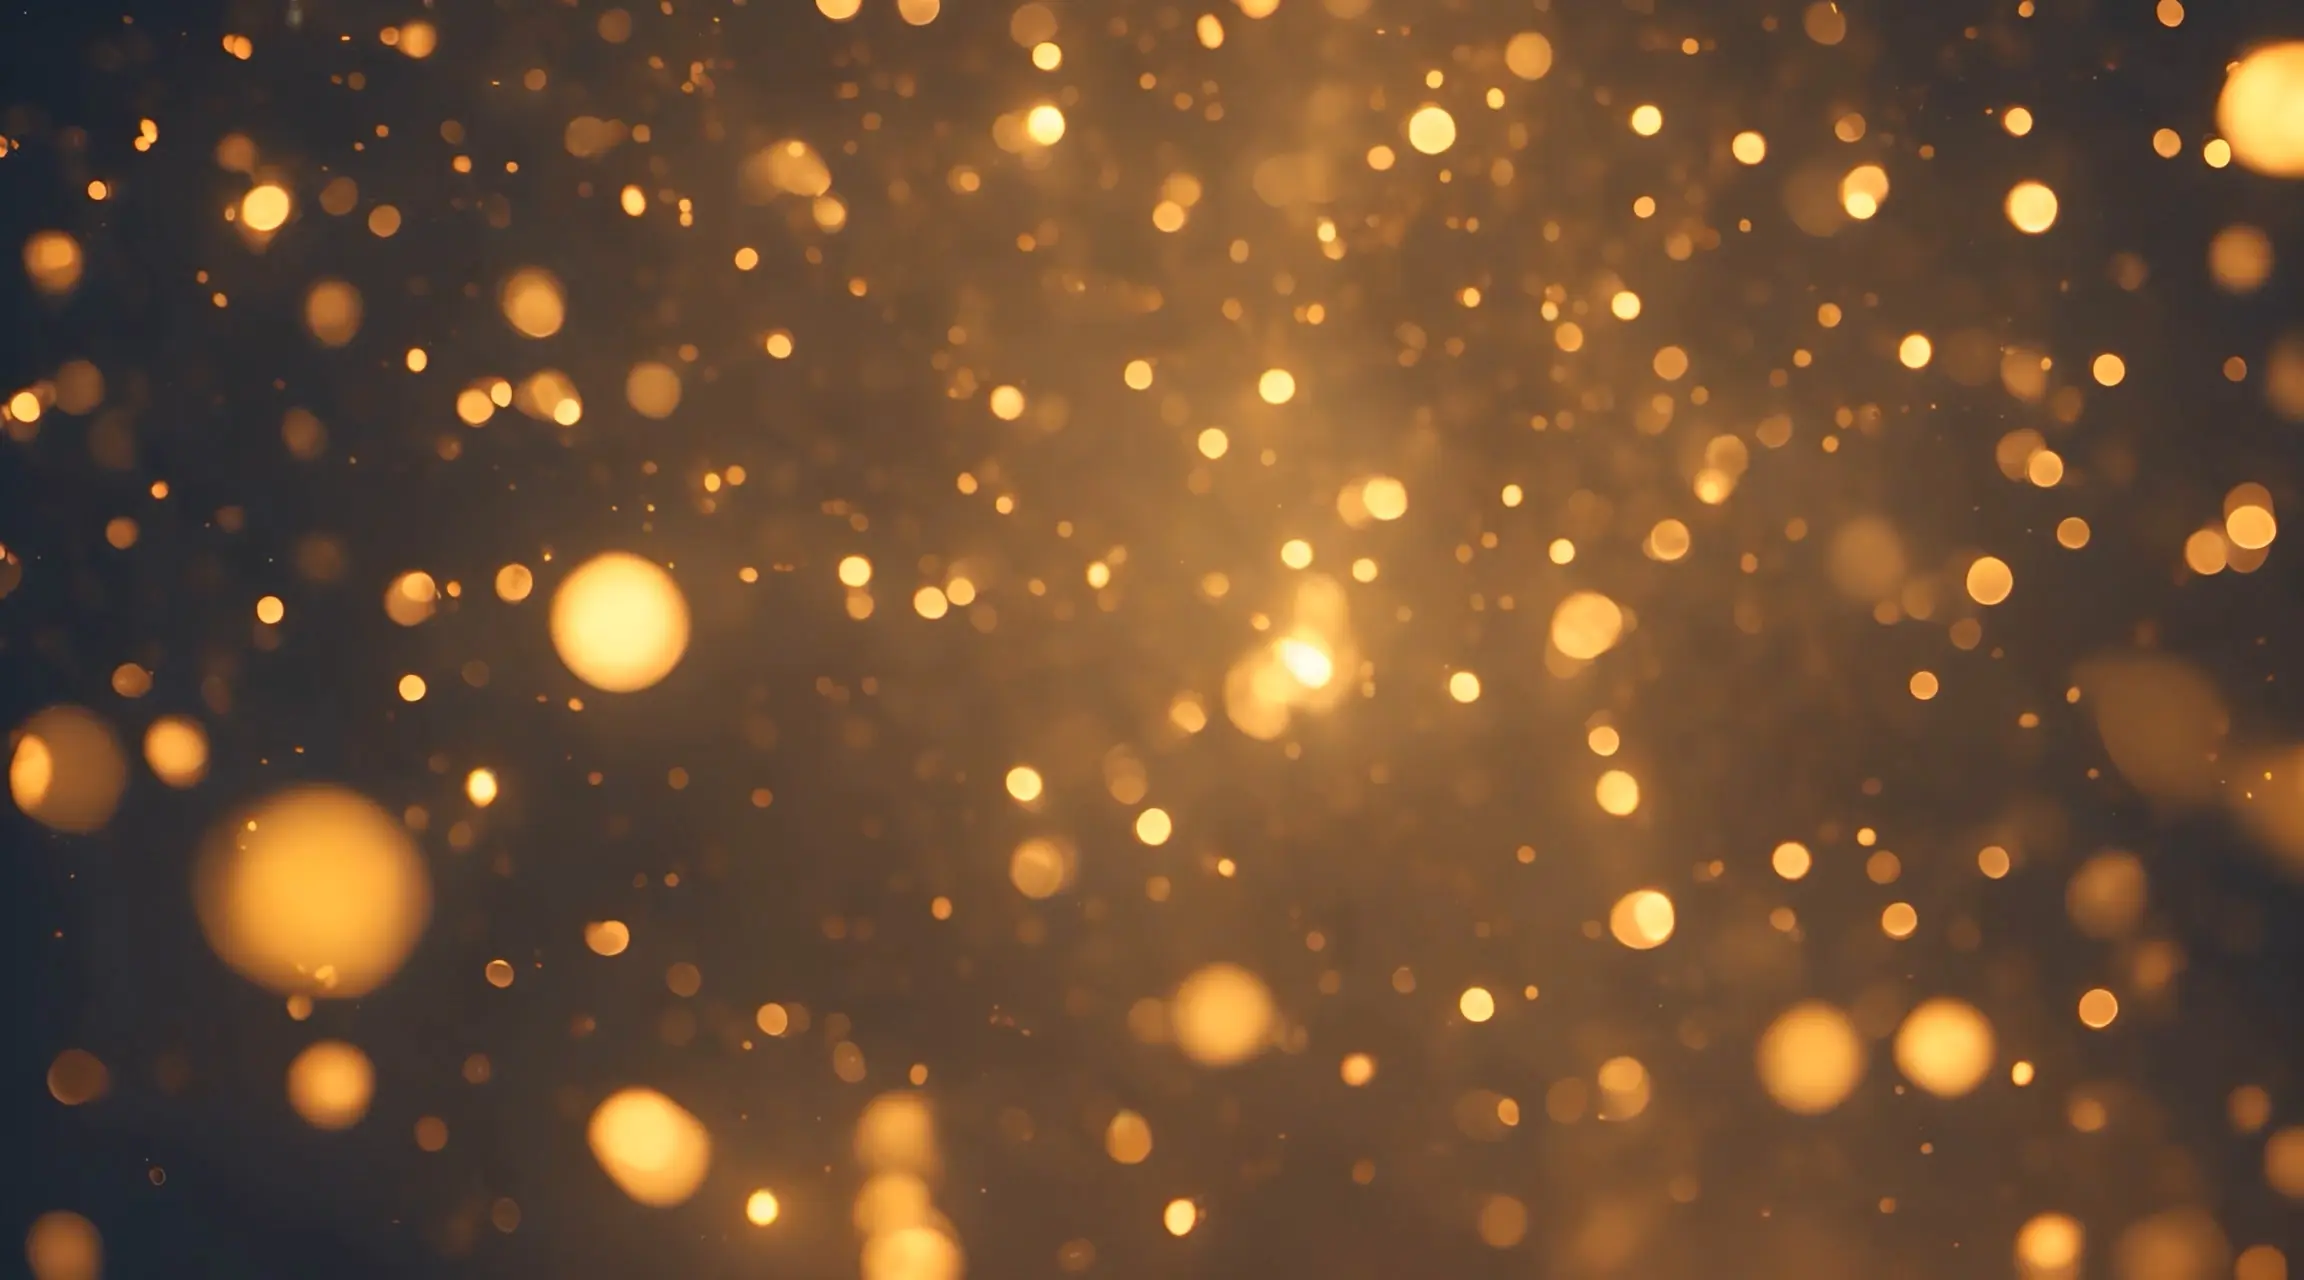 Glittering Gold Dust Floating Video Backdrop